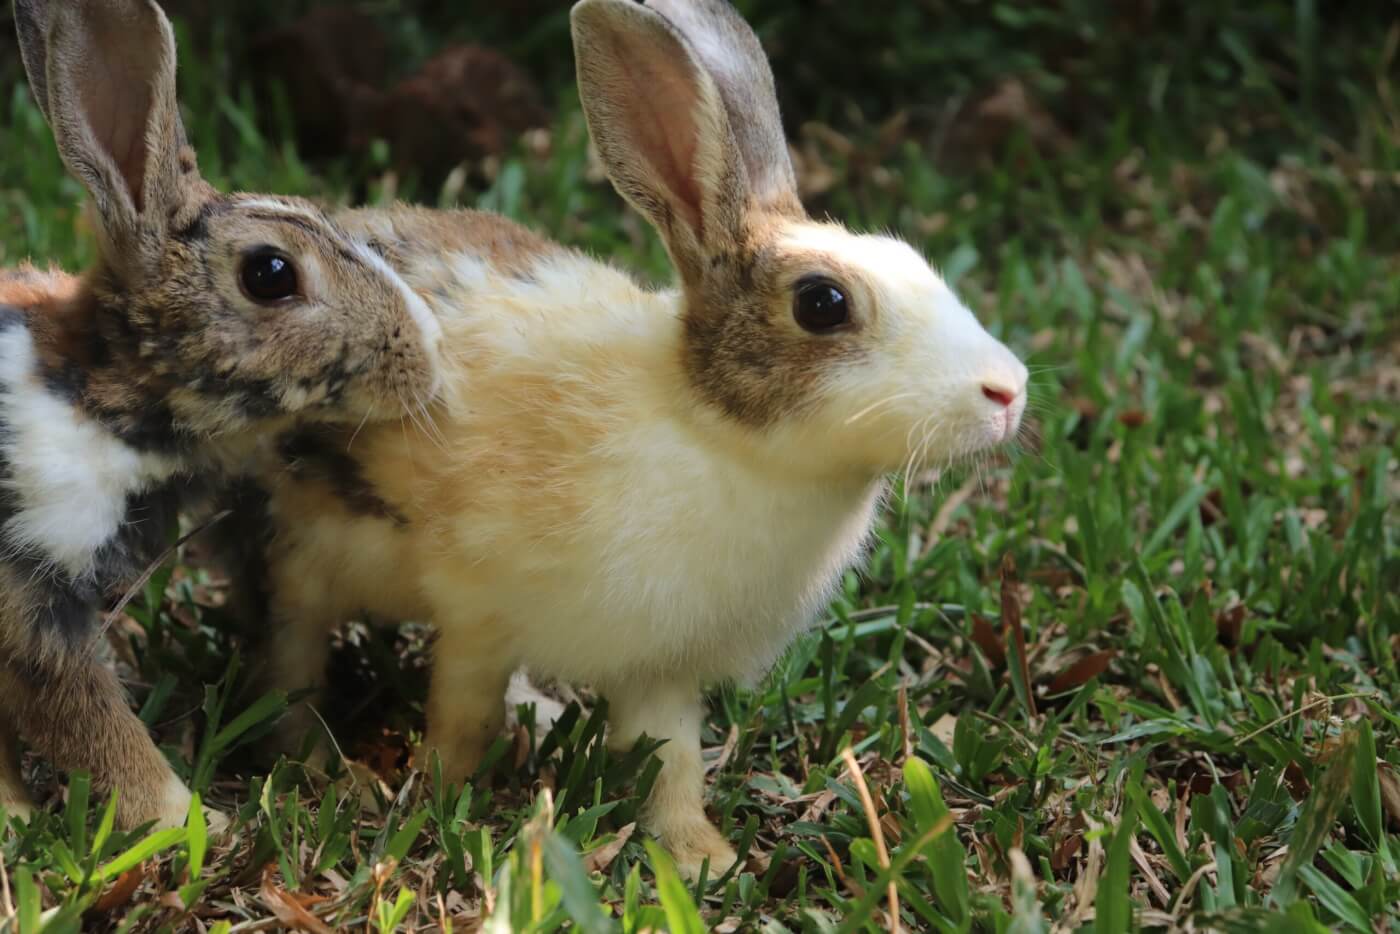 Following Complaints, Former Cricketer Vinod Kambli Relinquishes Five Rabbits to PETA India for Rehabilitation